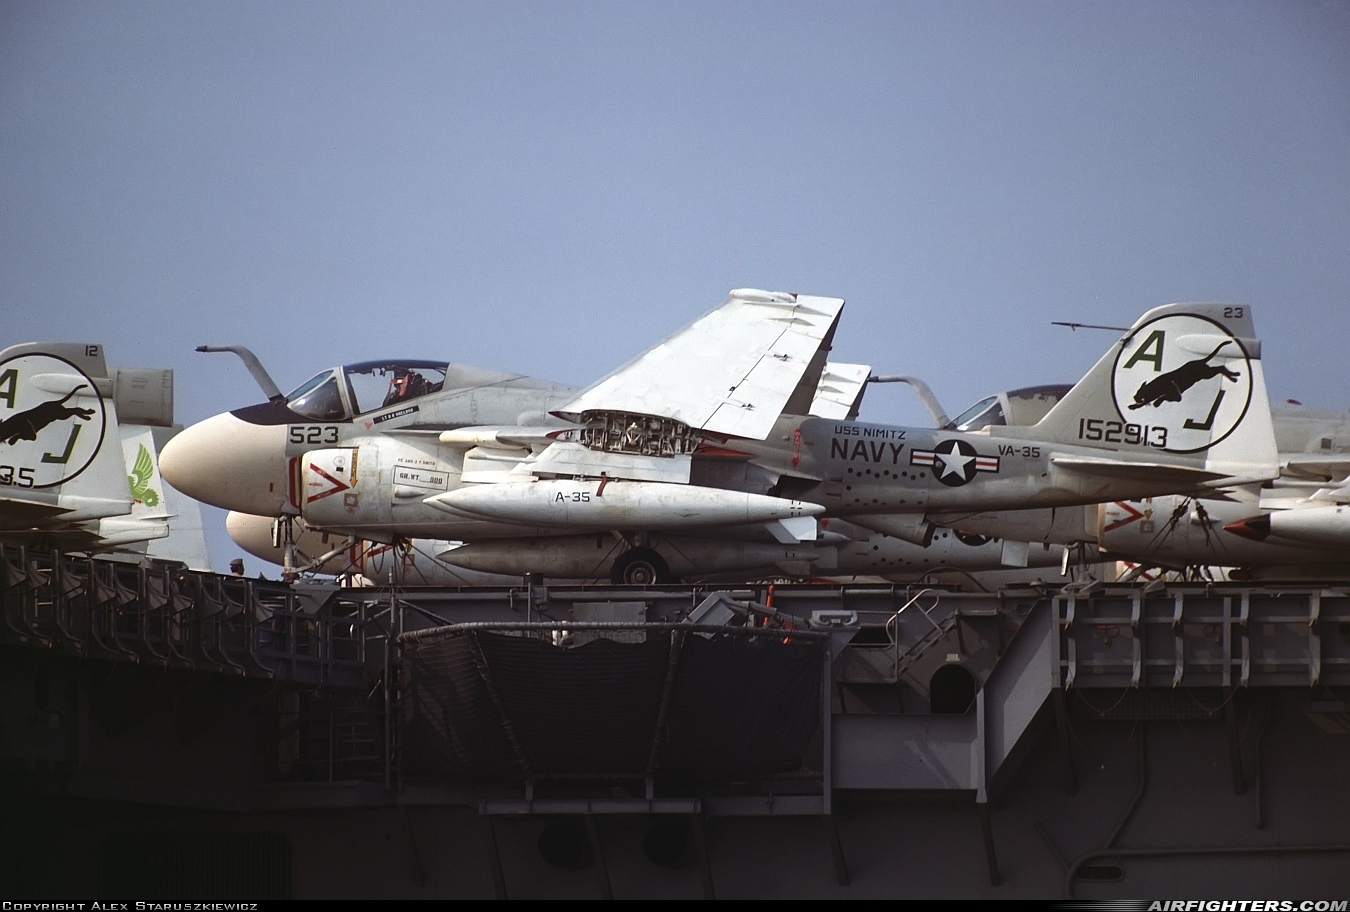 USA - Navy Grumman KA-6D Intruder 152913 at Off-Airport - Wilhelmshaven, Germany